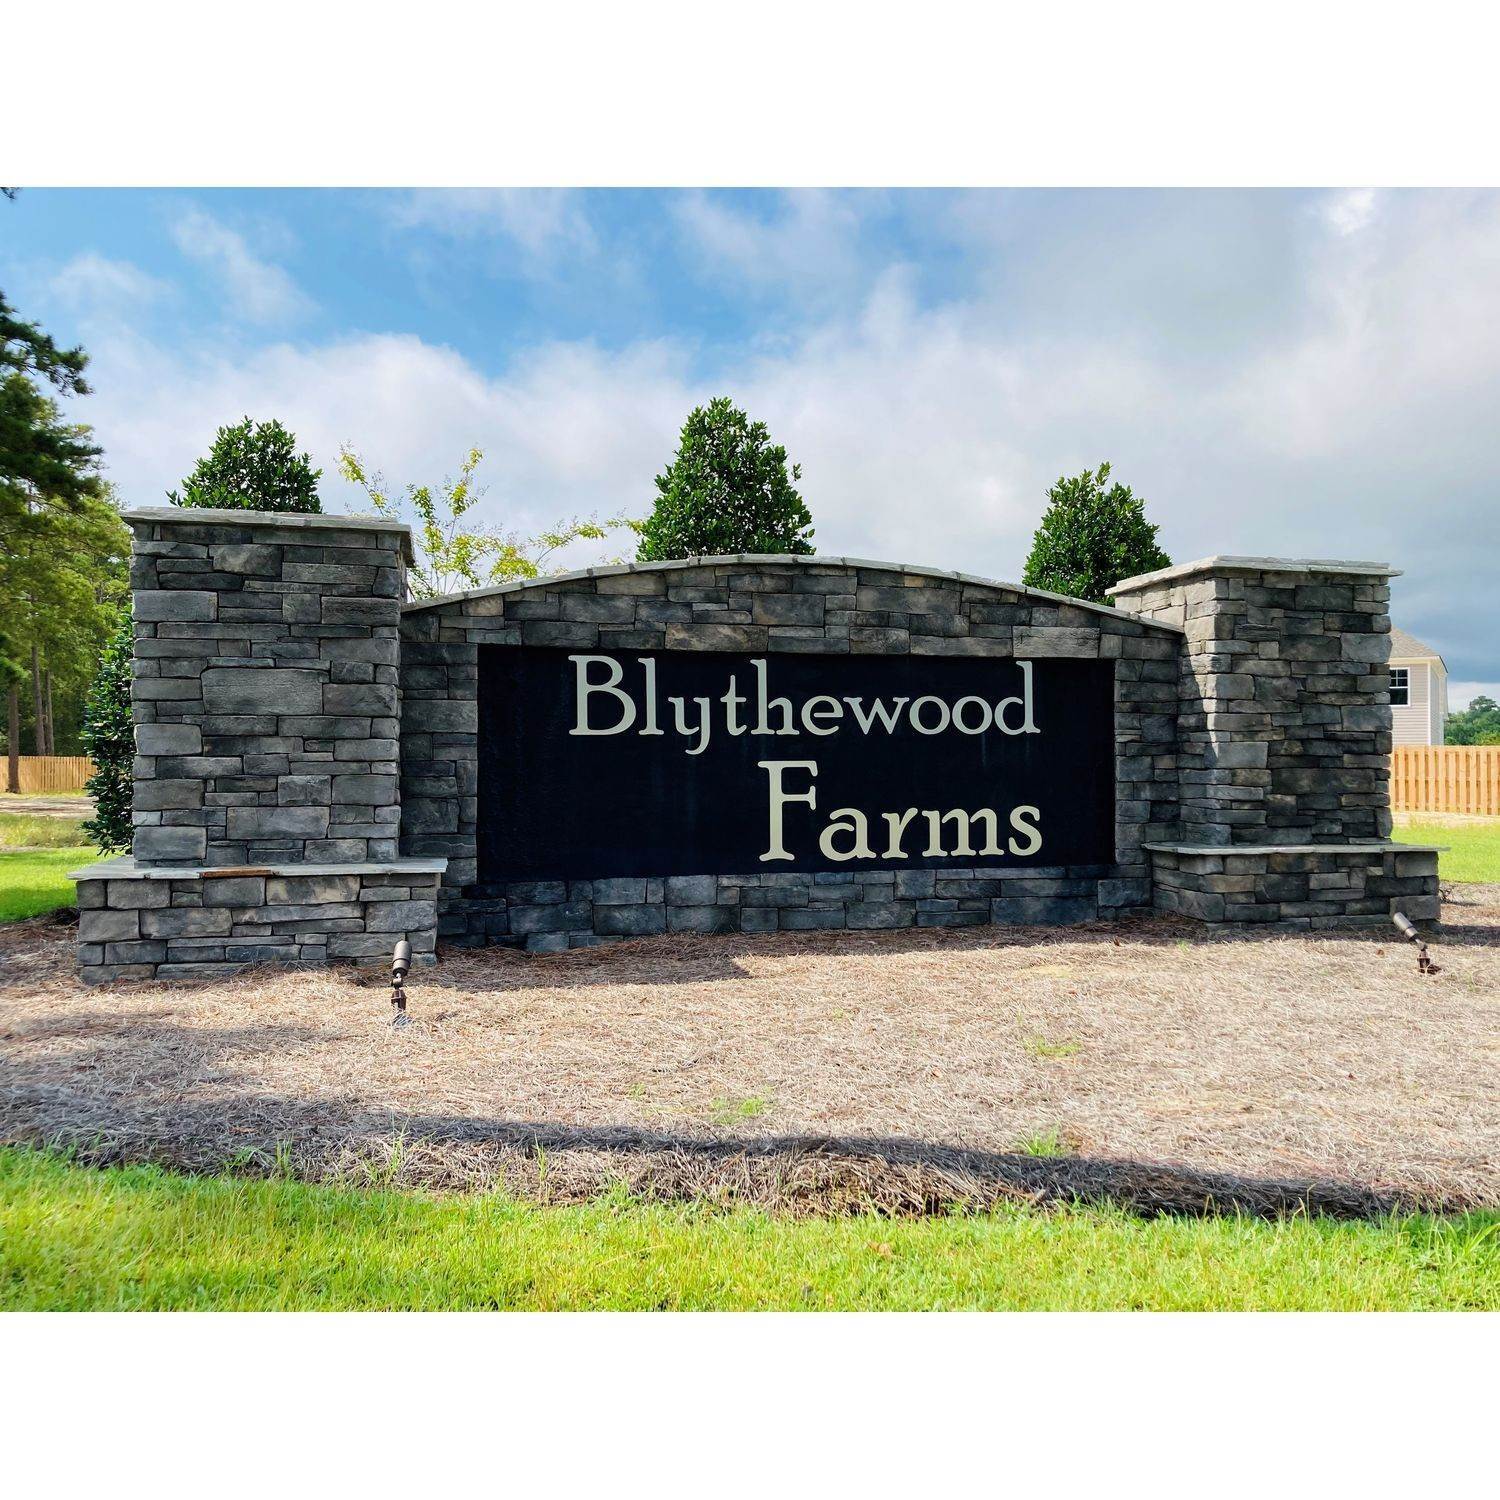 2. Blythewood Farms建于 1104 Deep Creek Road, Blythewood, SC 29016